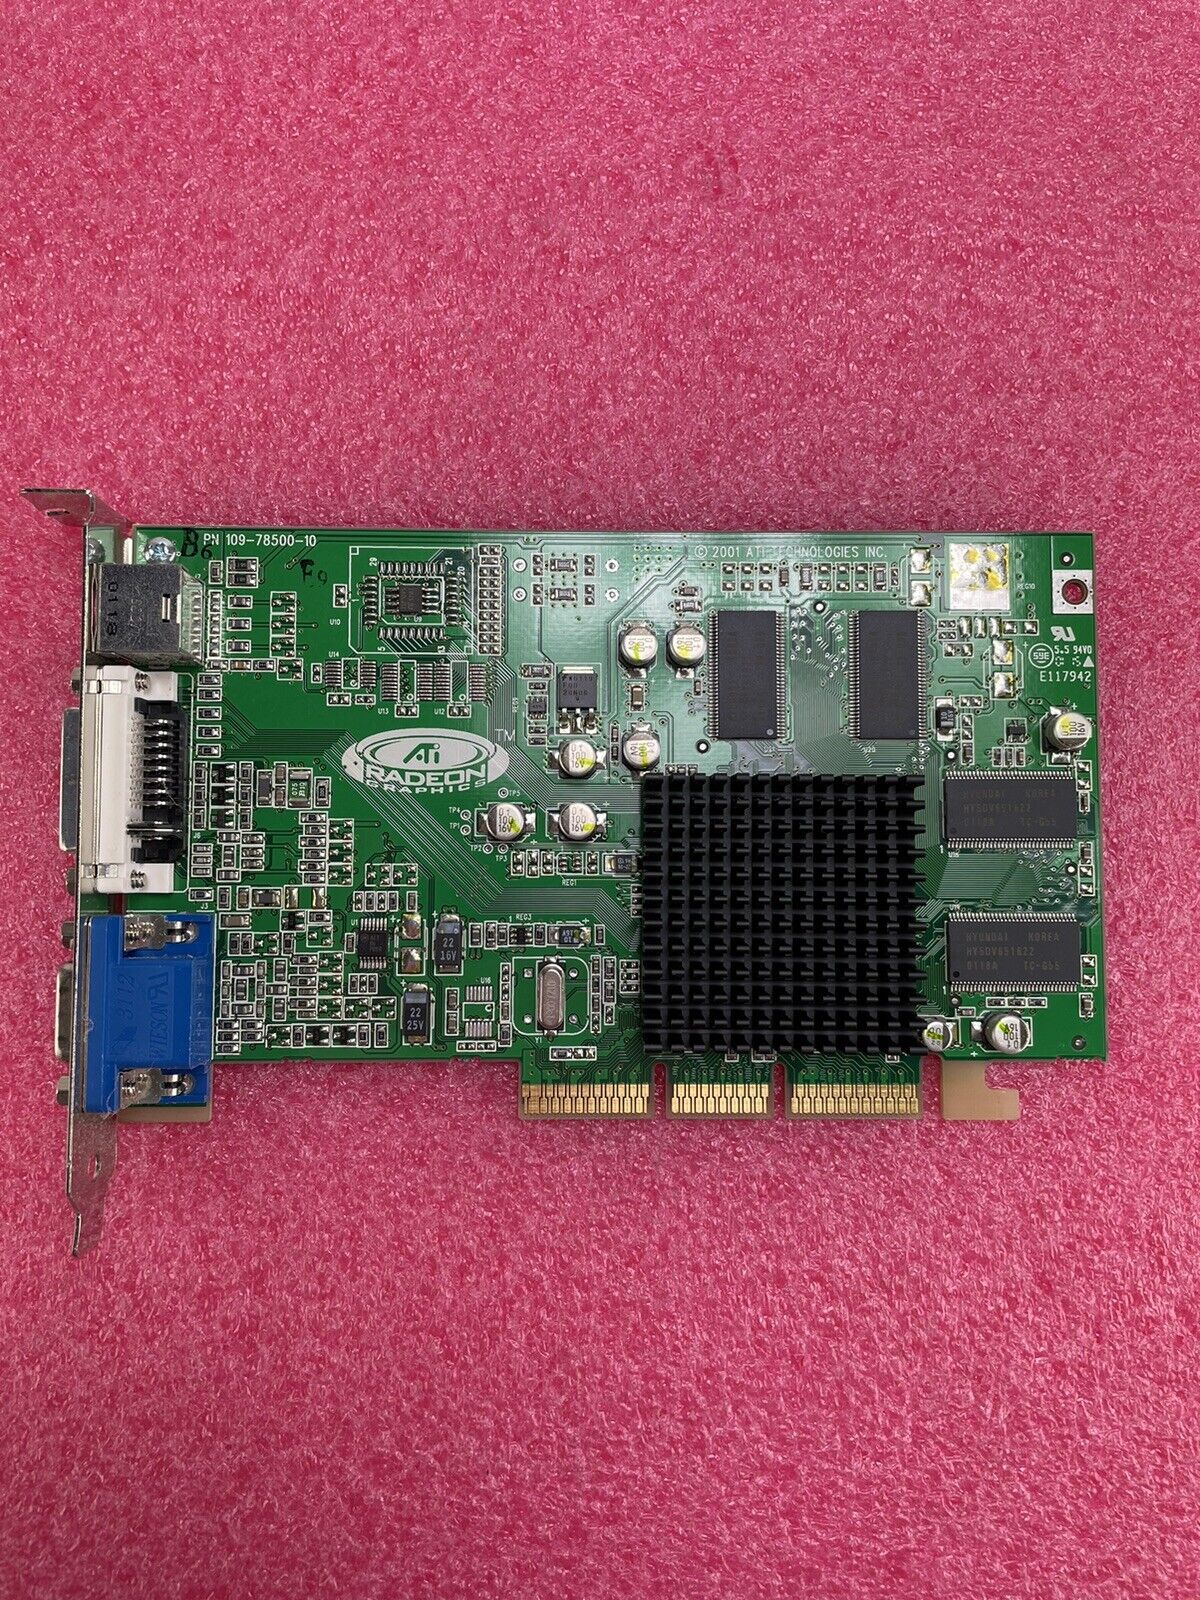 ATI Radeon RV100 SD32M 32MB AGP Graphics Card